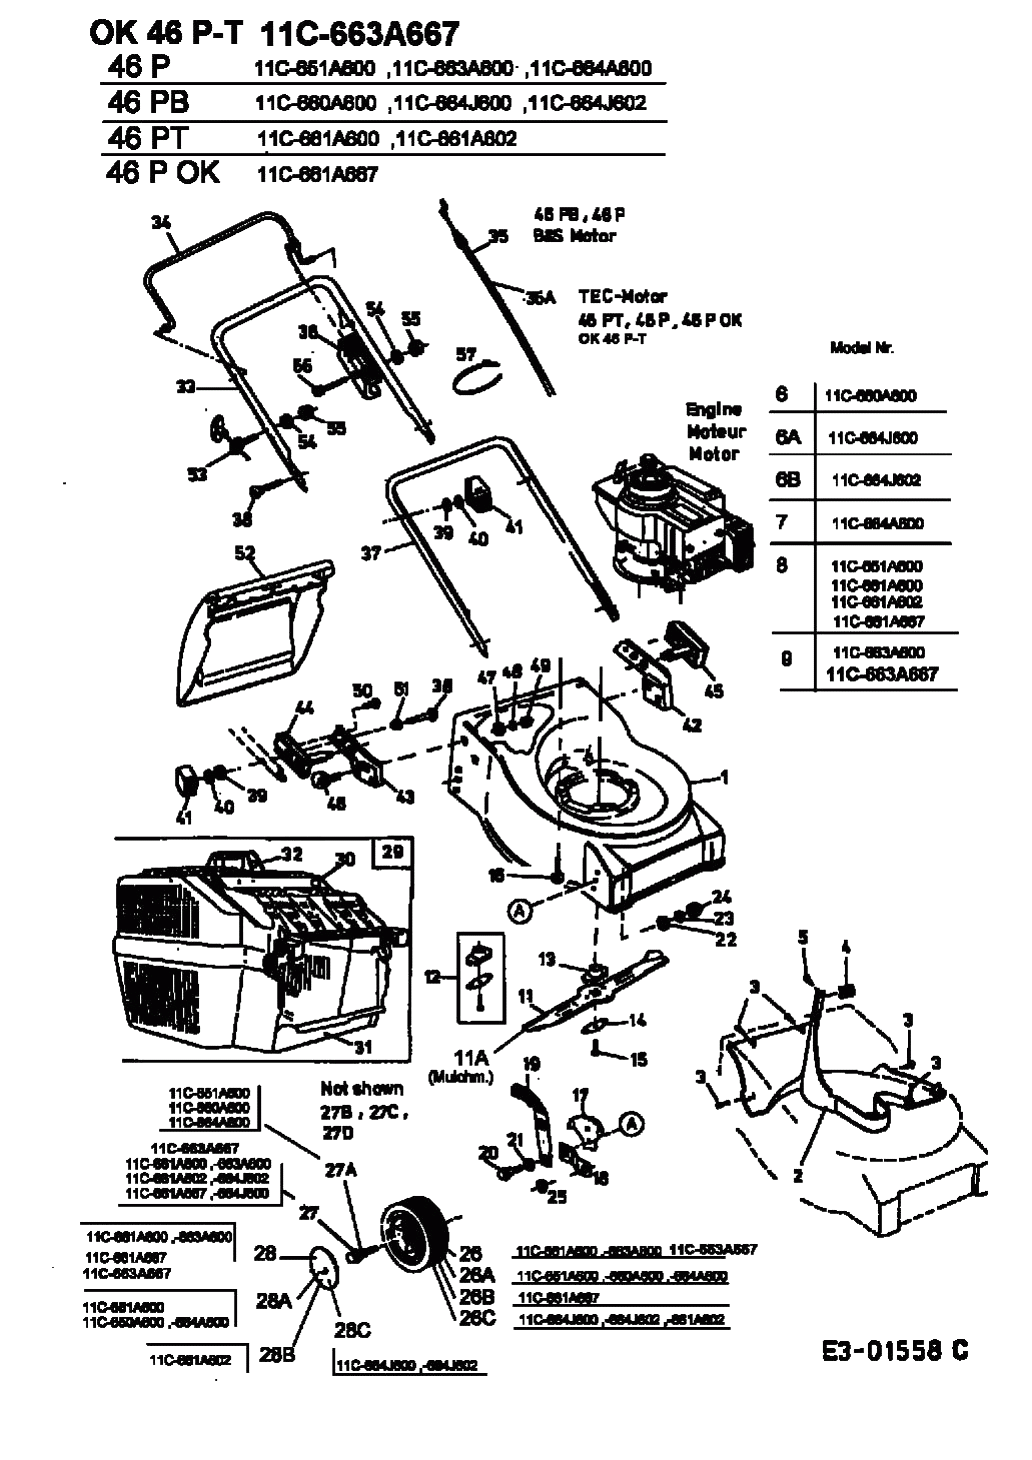 MTD Артикул 11C-661A602 (год выпуска 2003). Основная деталировка